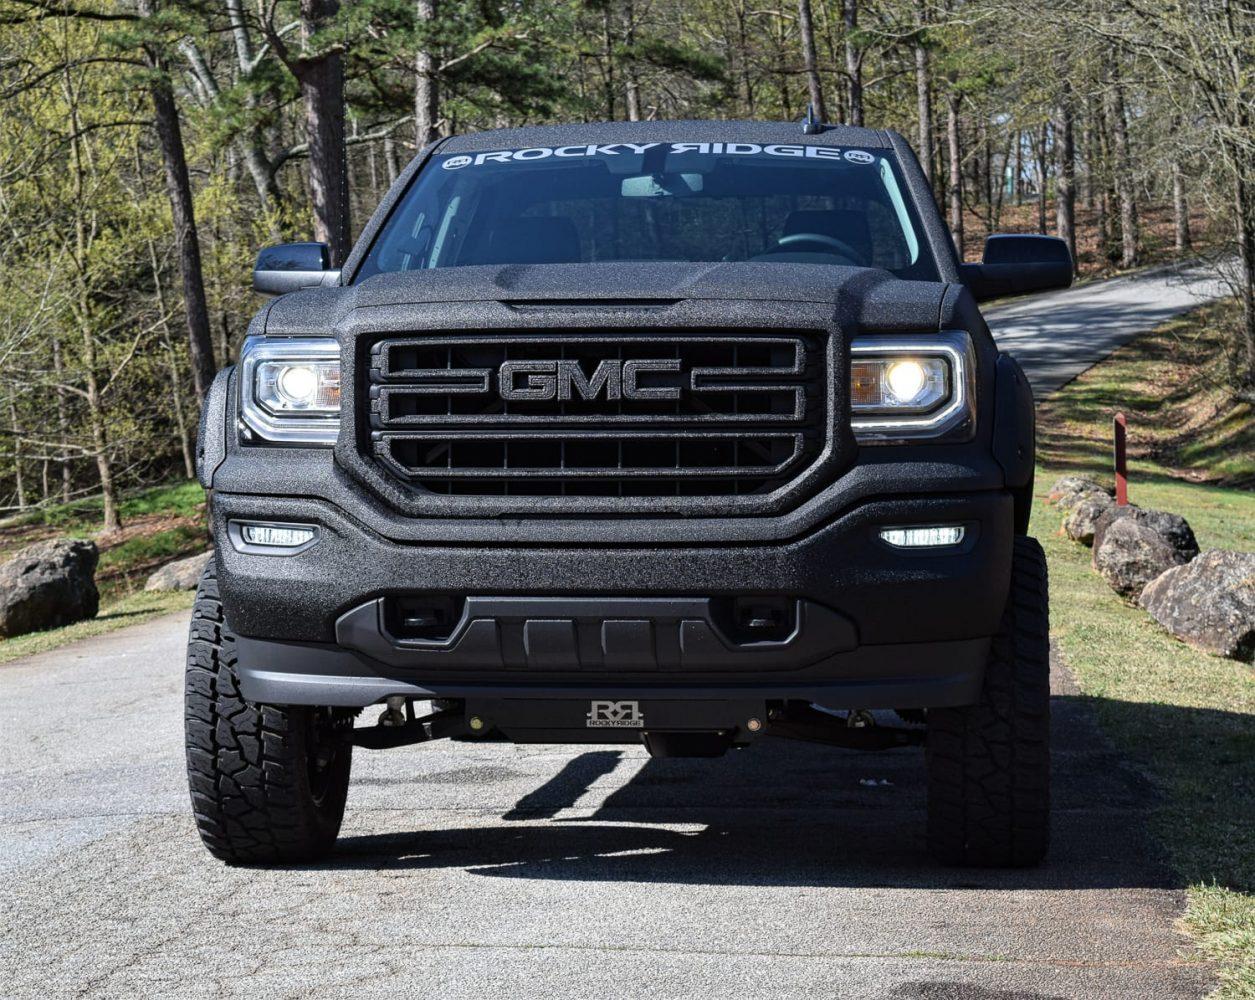 Black Grill for GMC Logo - GMC Sierra Z71 Stealth XL Lifted Truck | Rocky Ridge Trucks